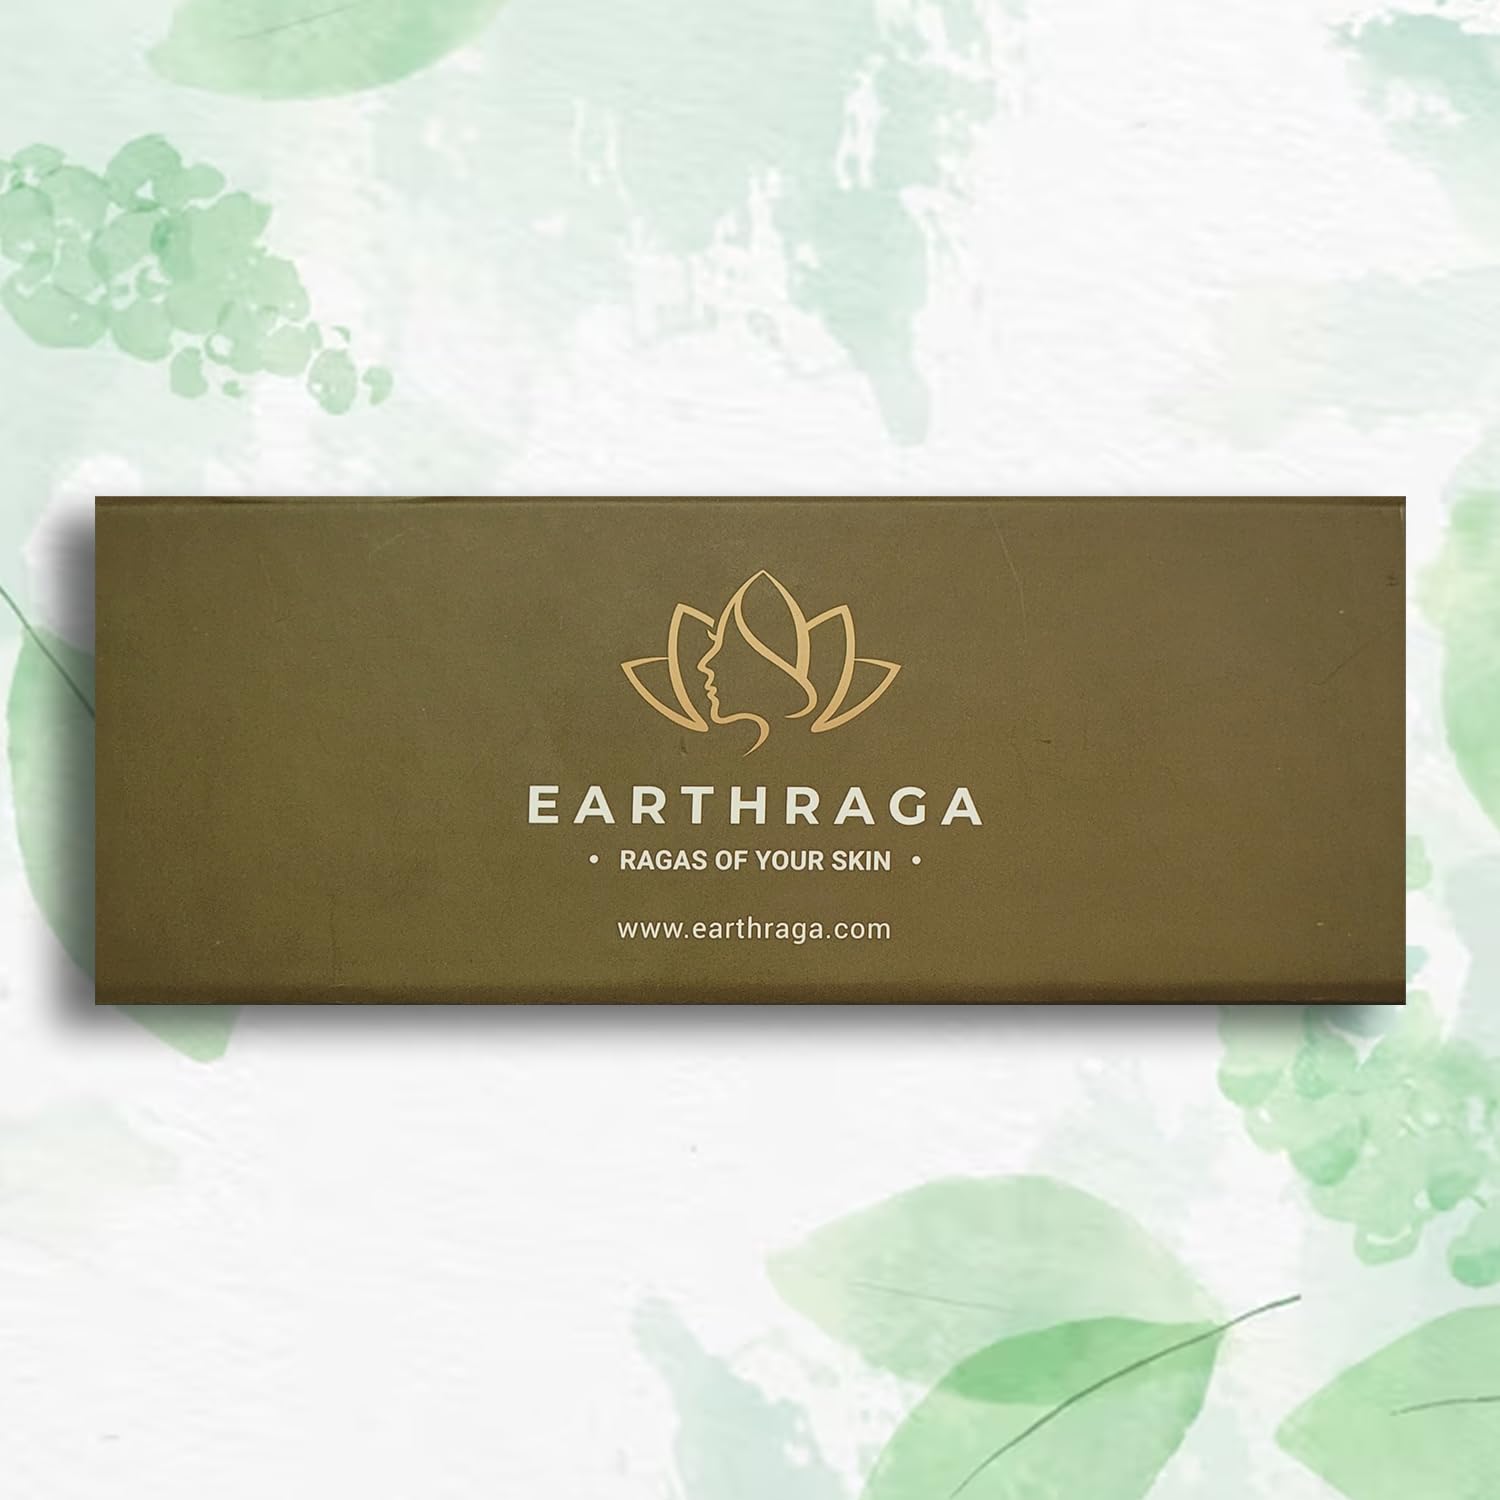 EARTHRAGA Gift Set For Men and Women | Bakuchiol Night Cream (30ml) |  Coconut Body Lotion (250gm) |  Vanilla, Luscious Honey  & Icy Mint Lip Balm(4gm X 3) |  Handmade Soap (125gm X 2) (Pack of 7 Items)